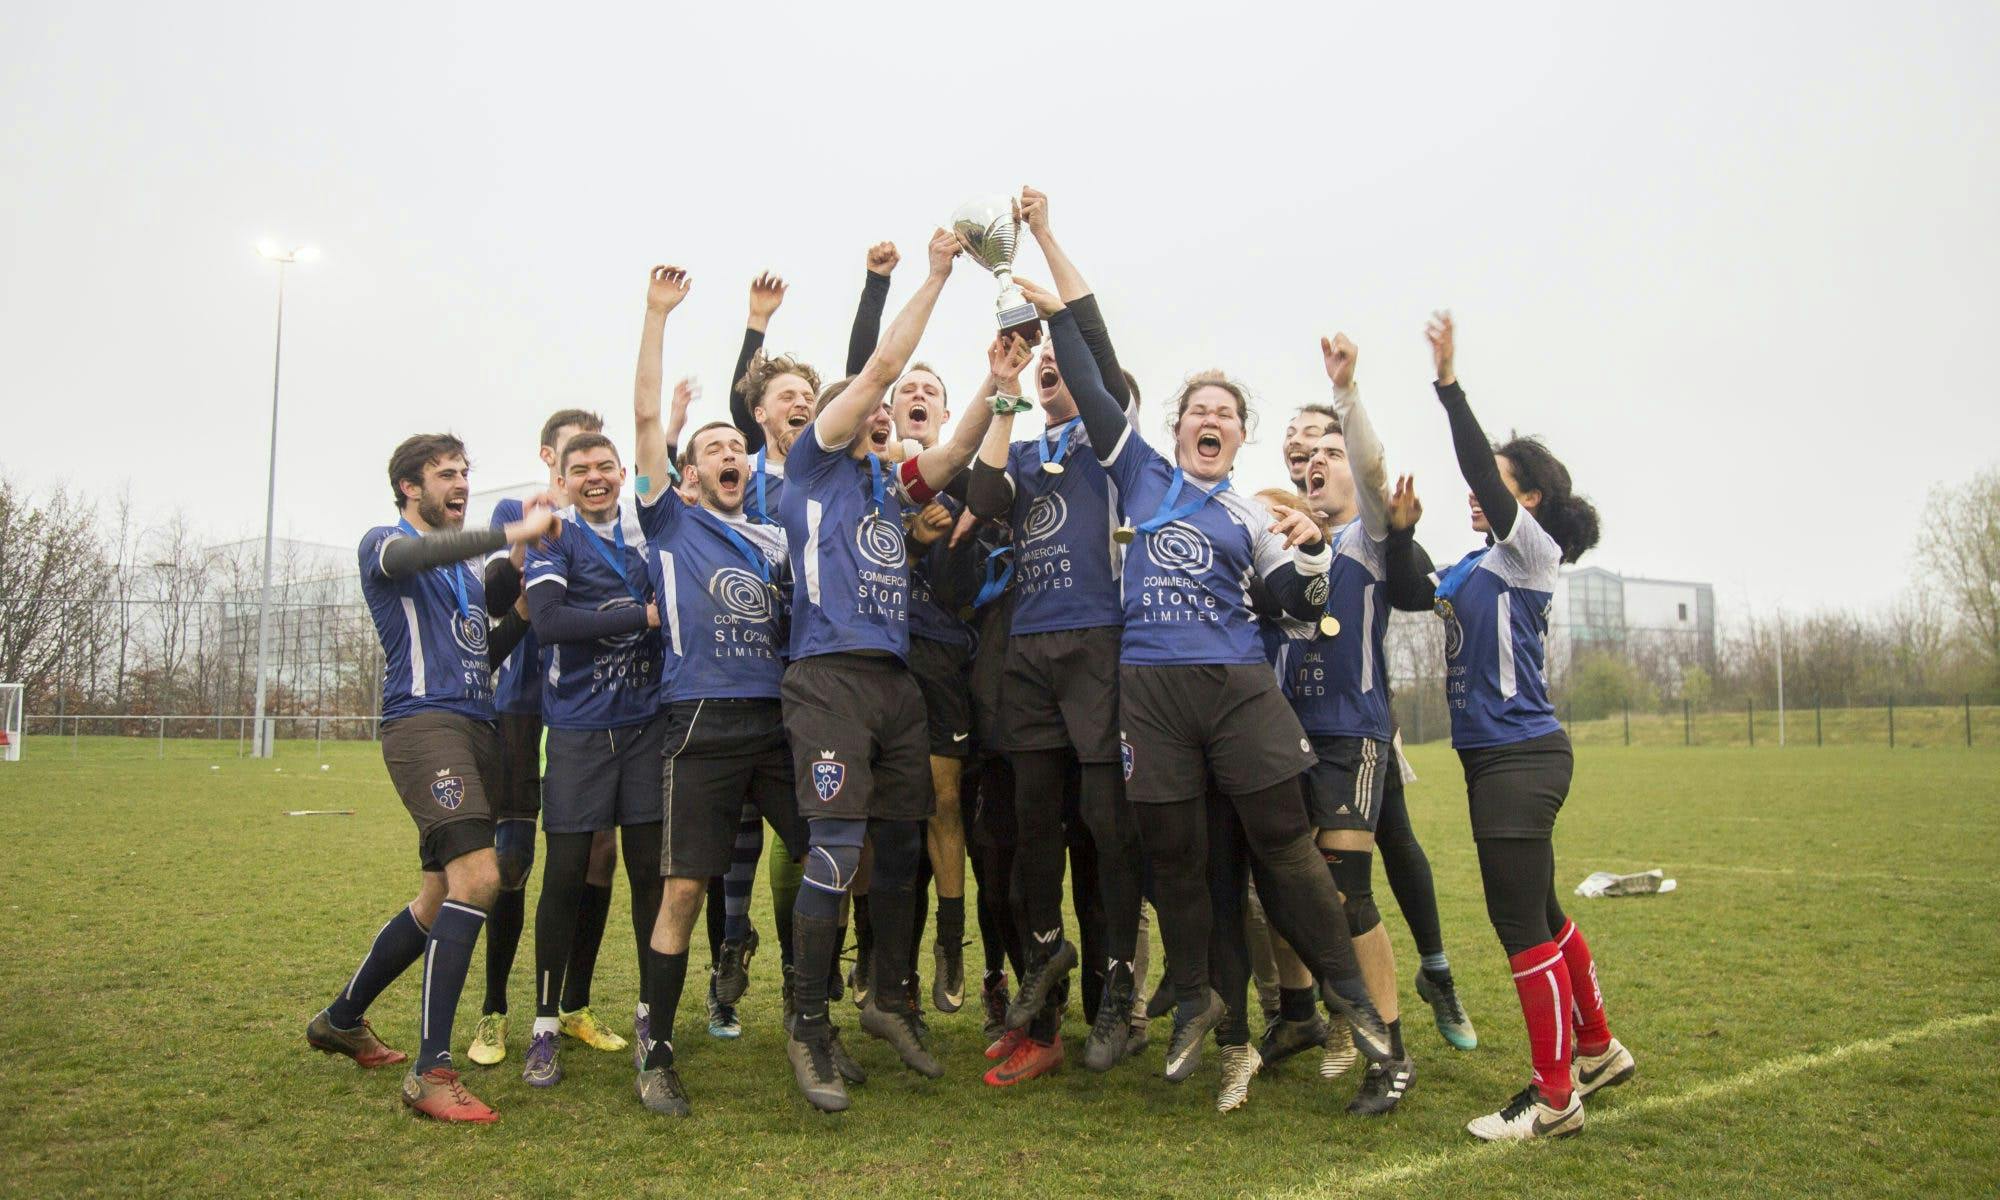 London Quidditch Club celebrate their BQC win by raising the trophy